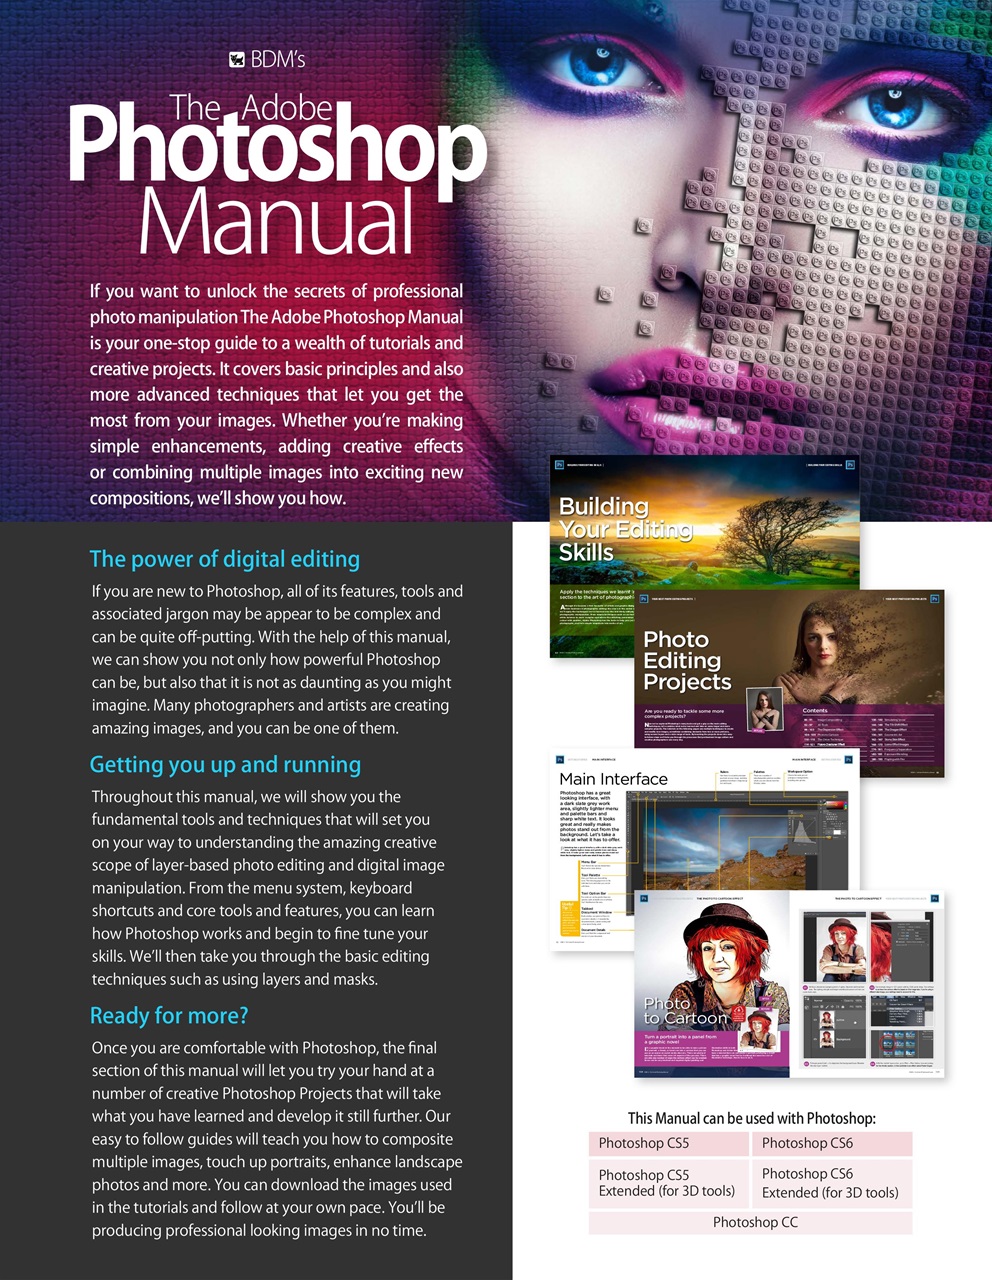 adobe photoshop guide pdf free download